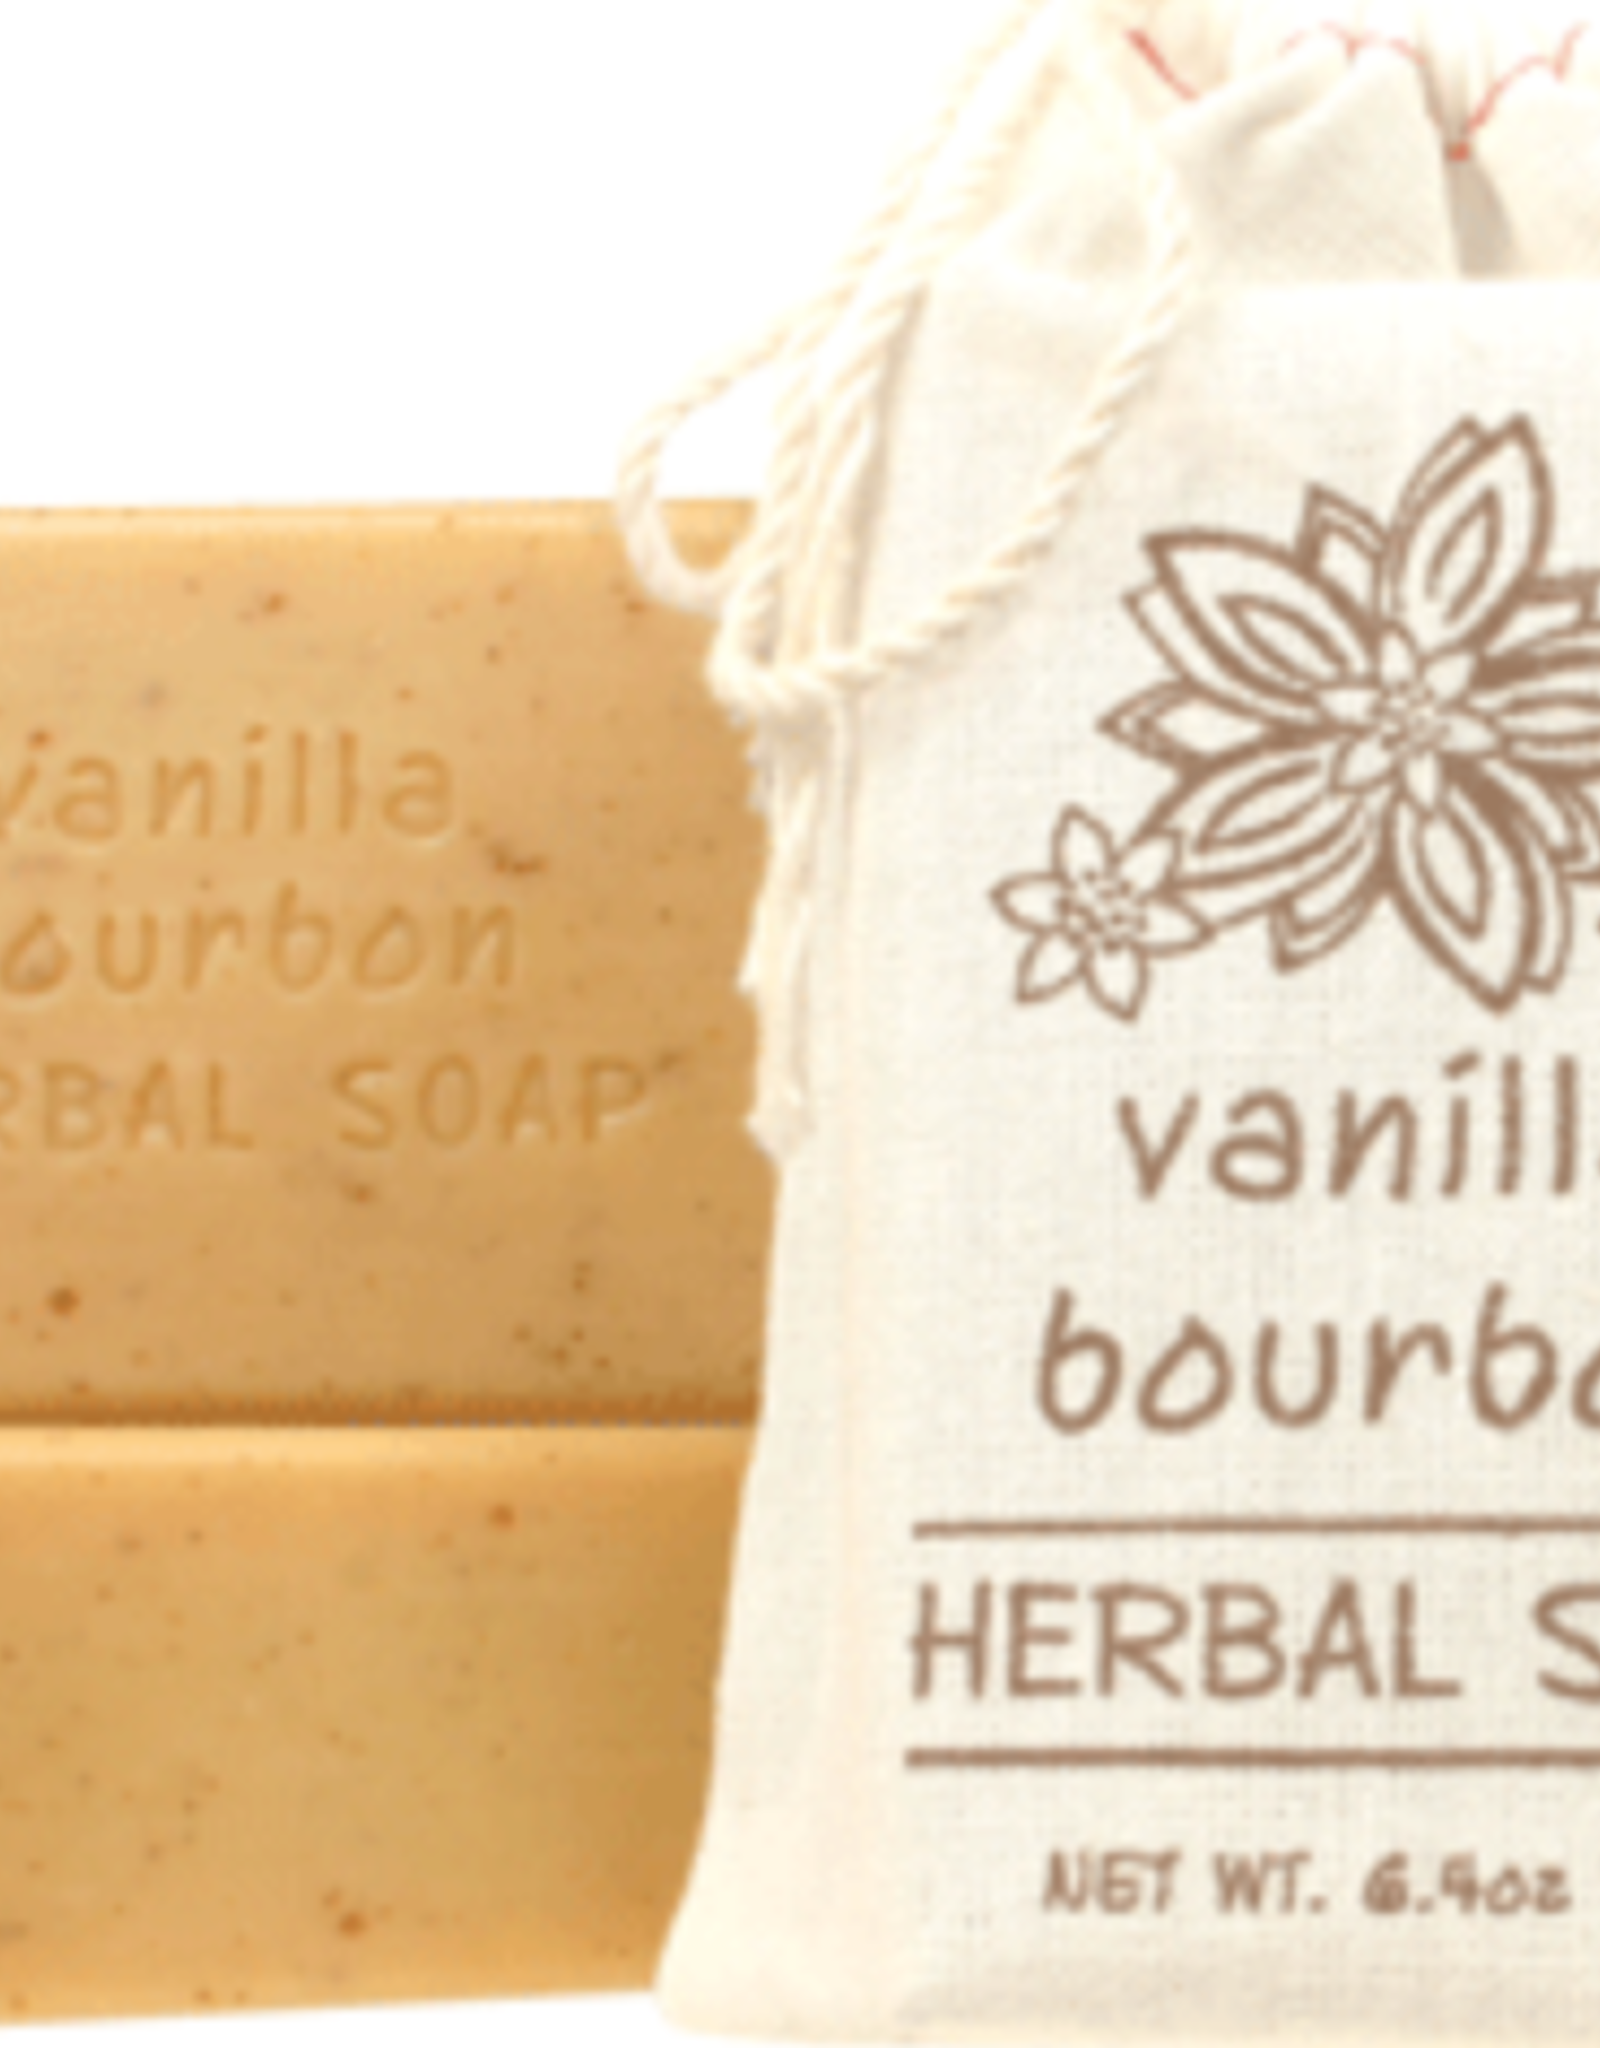 Vanilla Bourbon - Greenwich Bay - Herbal Soap in a Sack